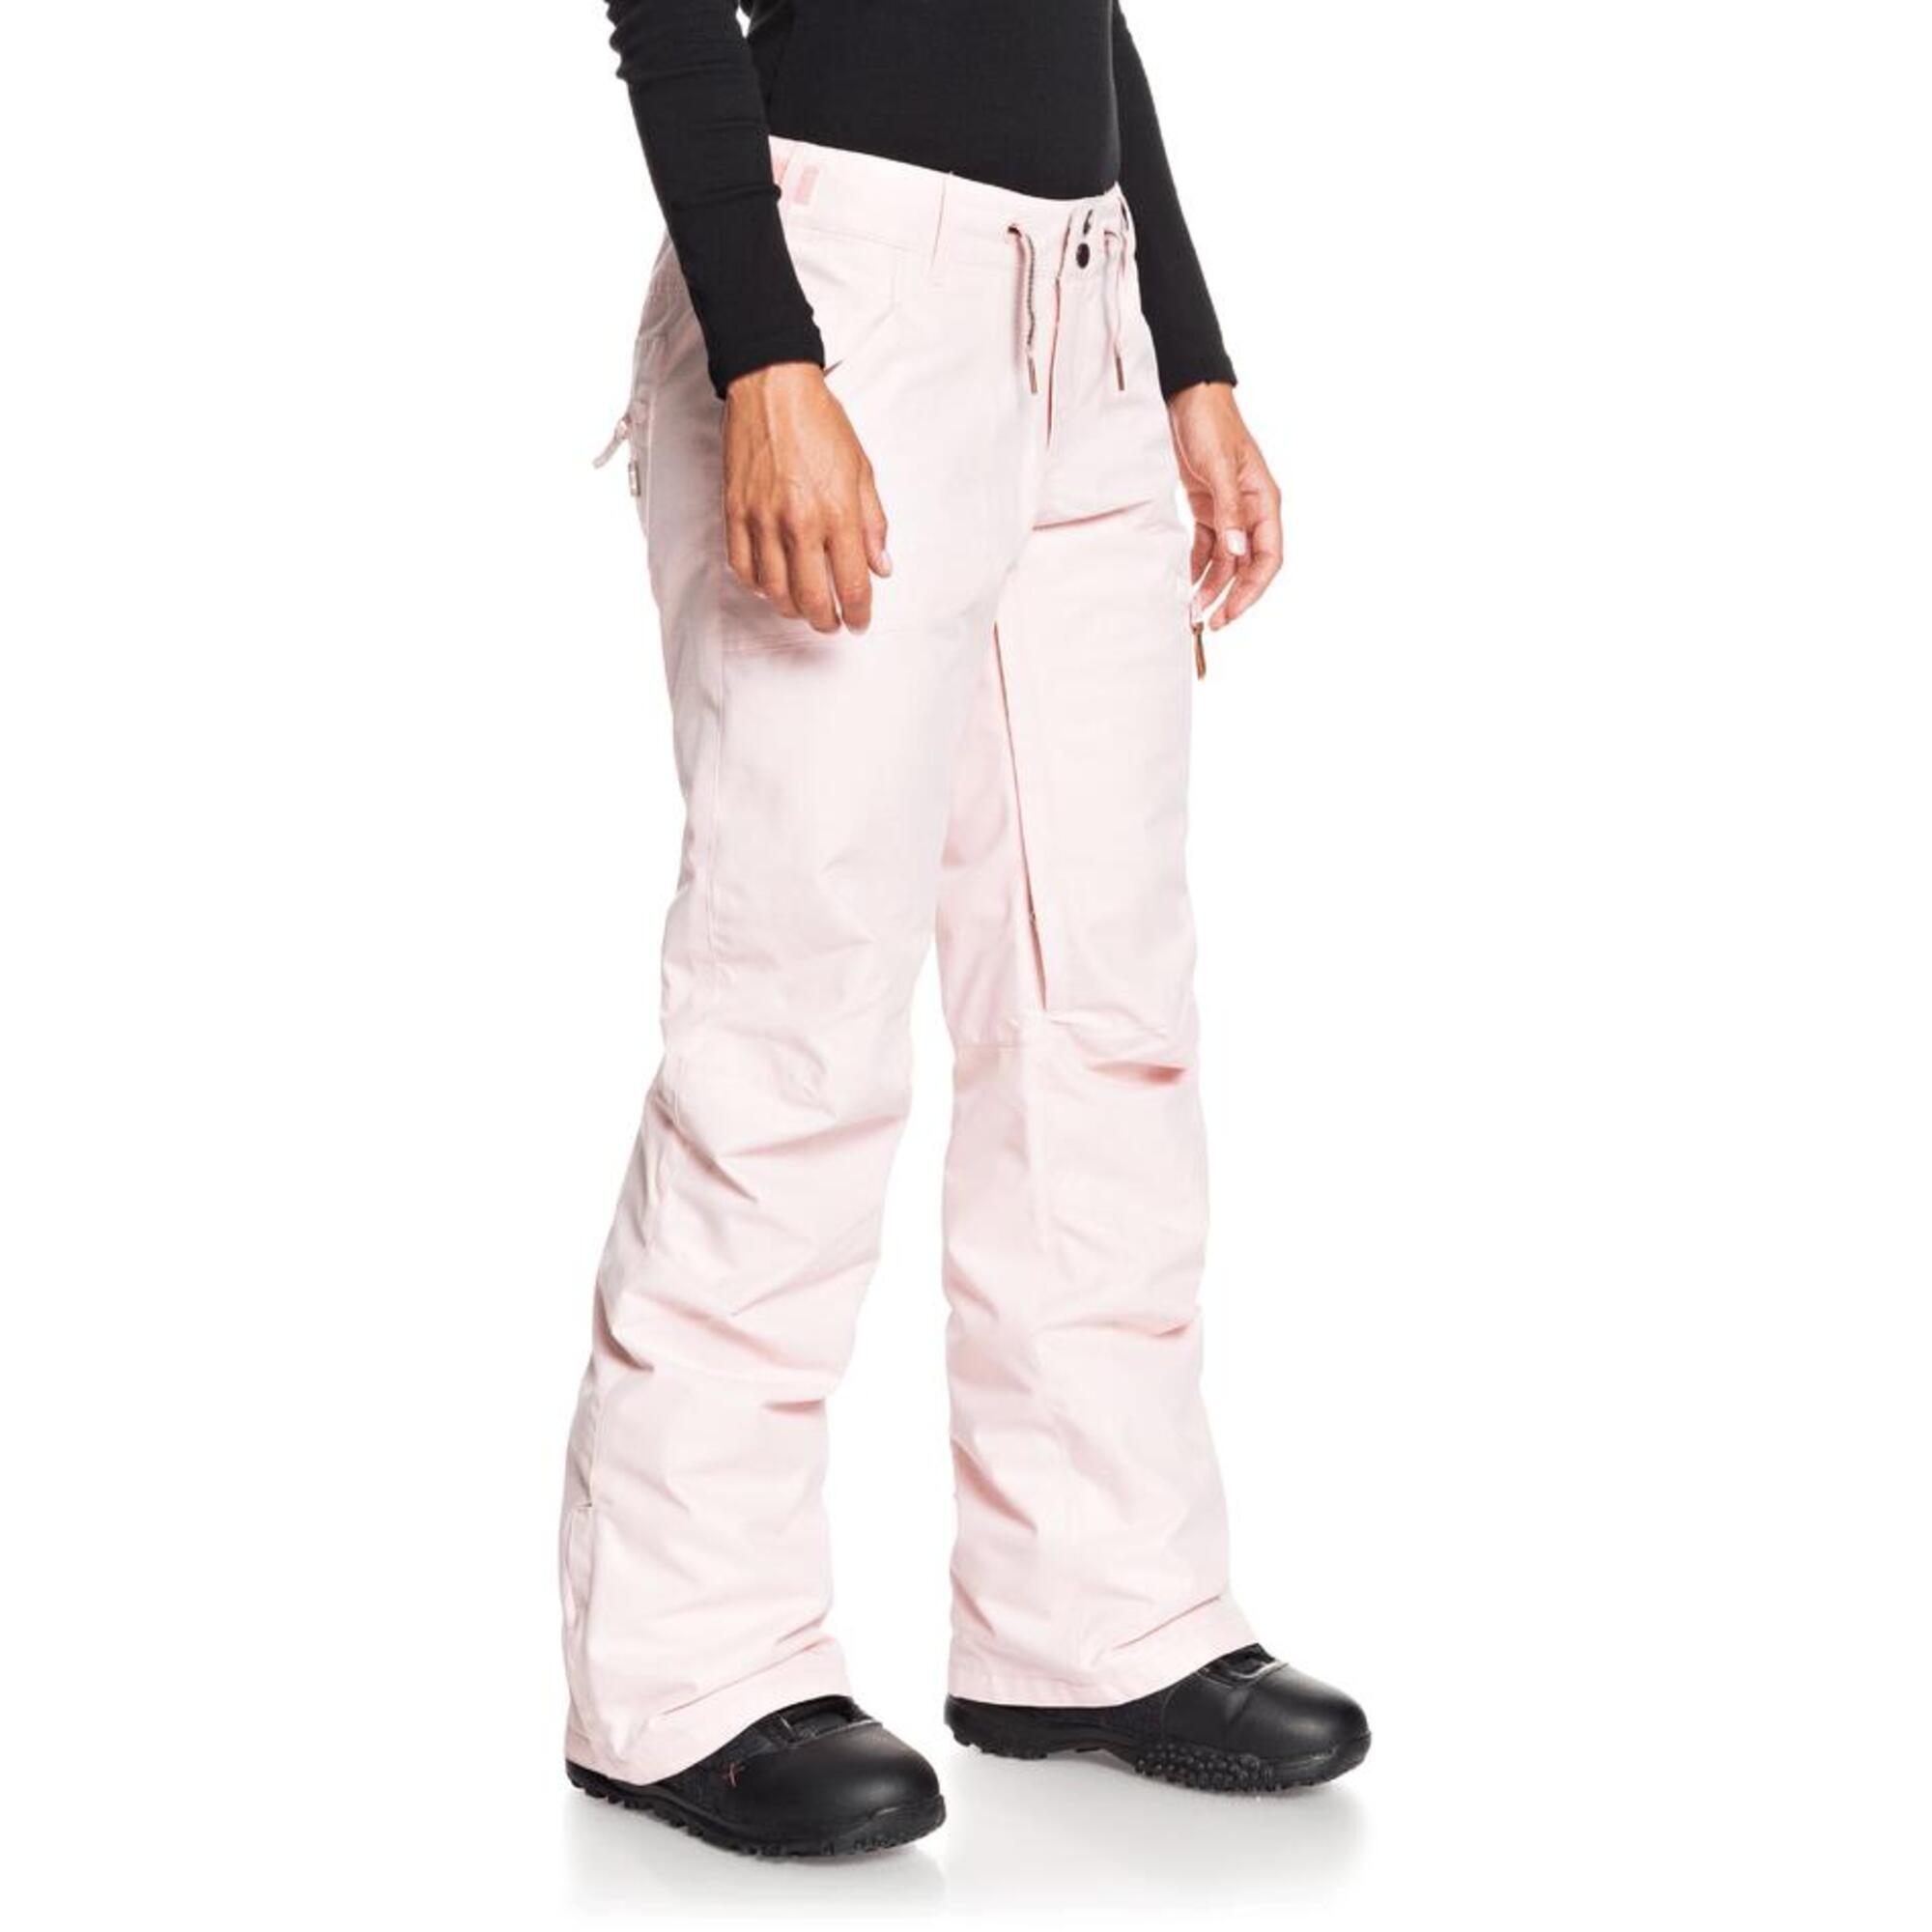 Nadia - pantalon de neige pour femmes ski & snow women's